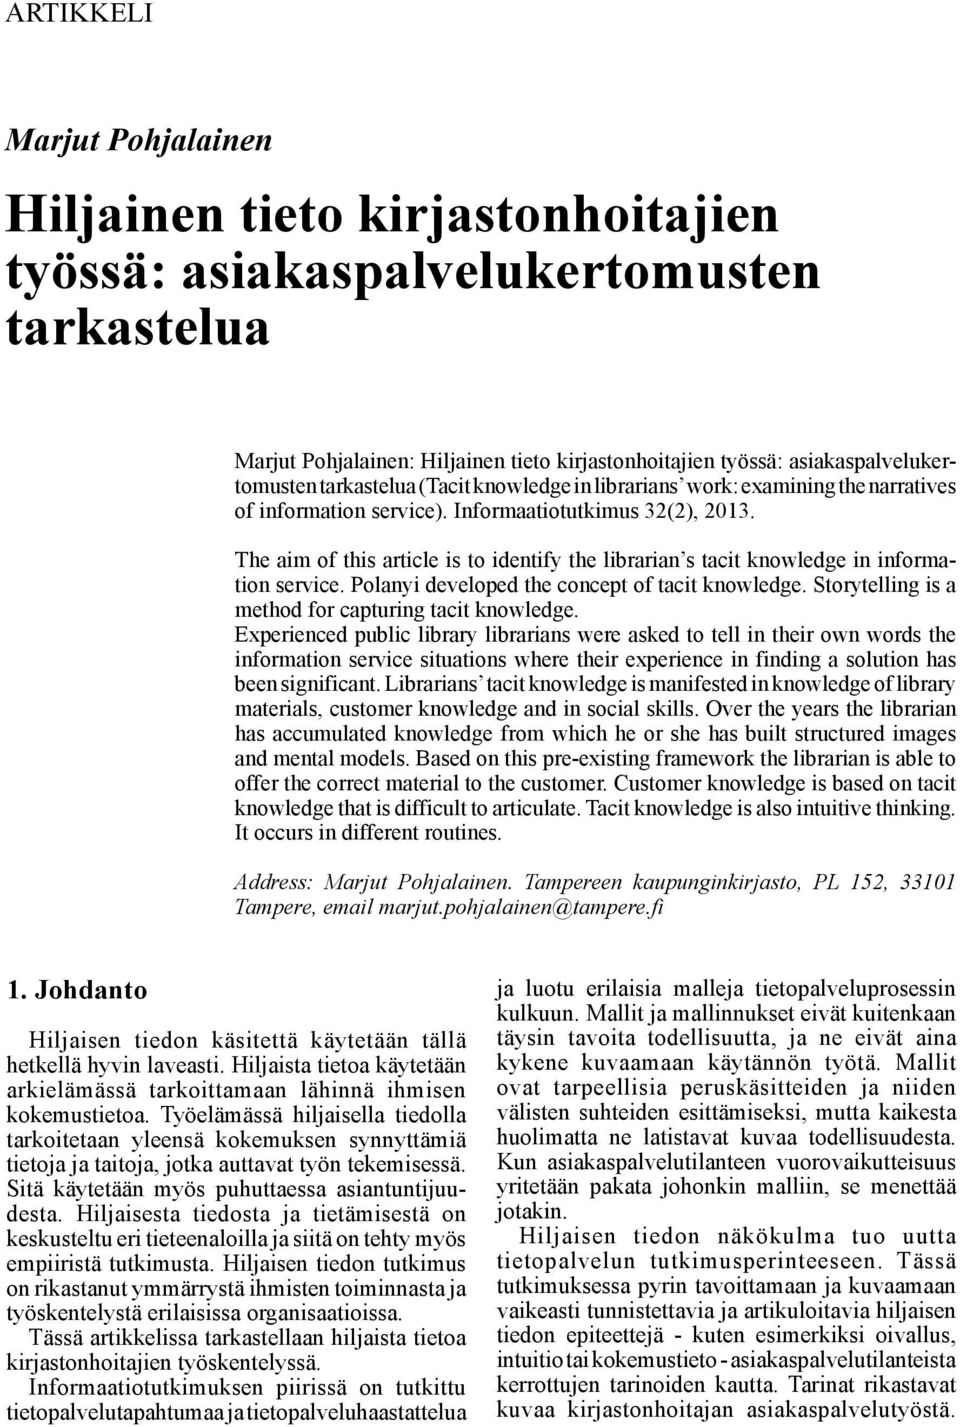 tarkastelua (Tacit knowledge in librarians work: examining the narratives of information service). Informaatiotutkimus 32(2), 2013.